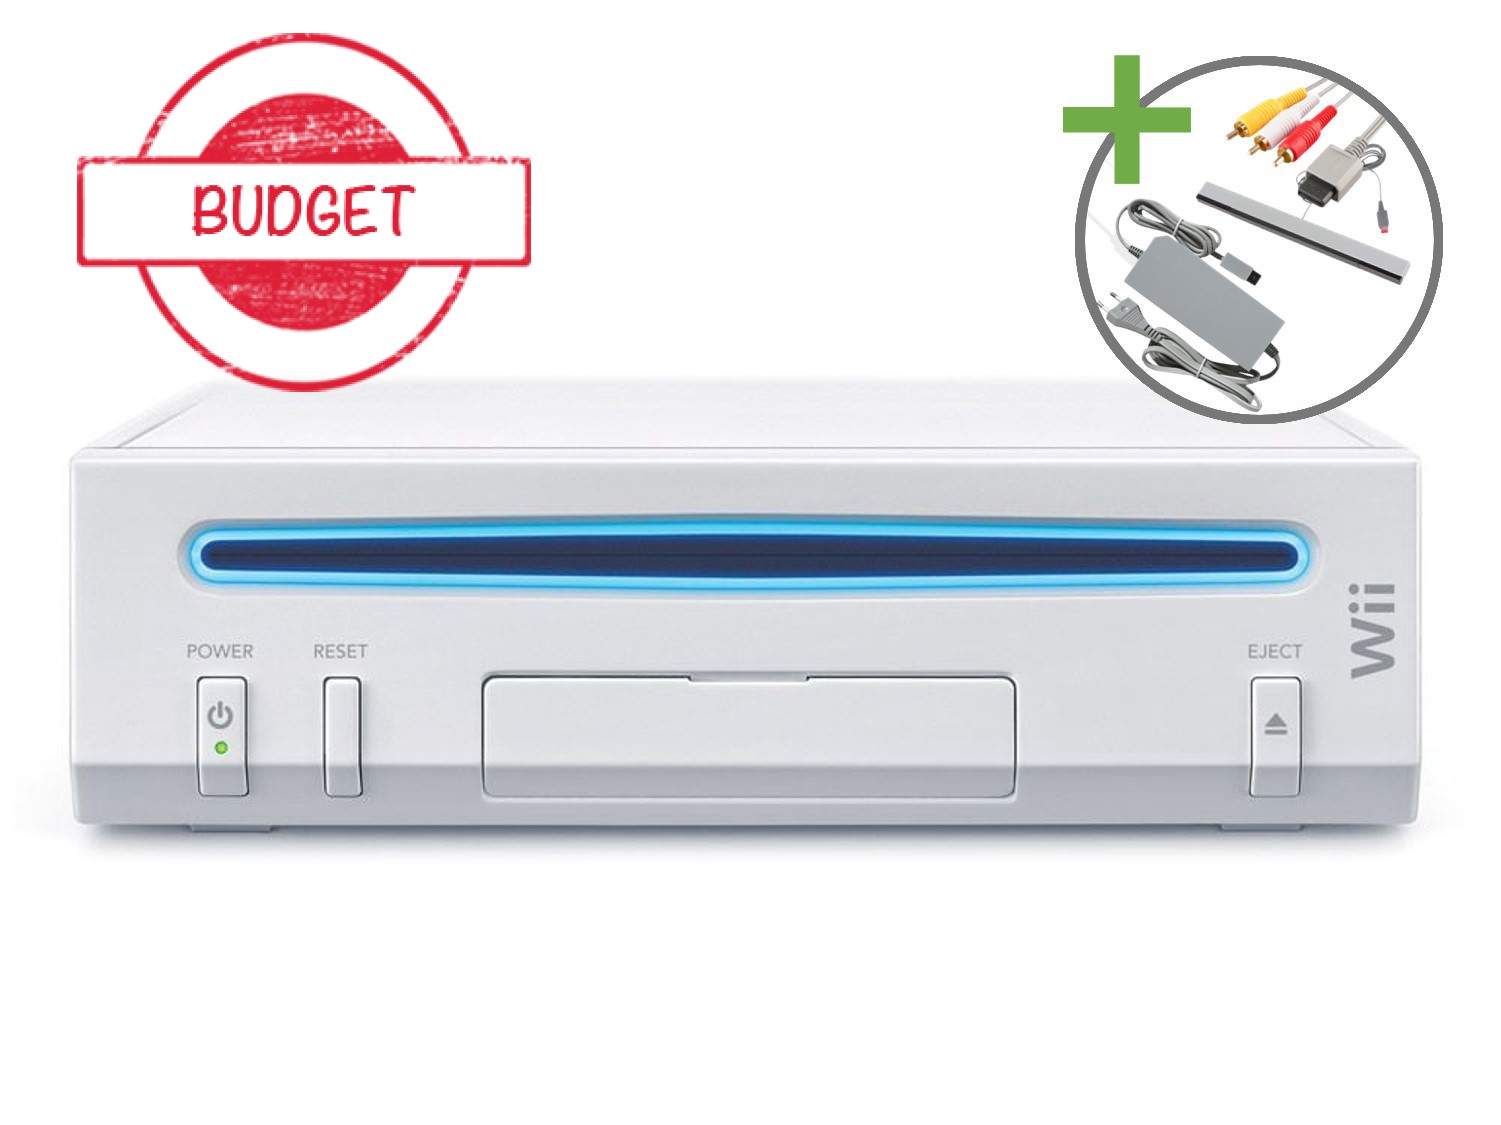 Nintendo Wii Starter Pack - Motion Plus White Edition - Budget - Wii Hardware - 2